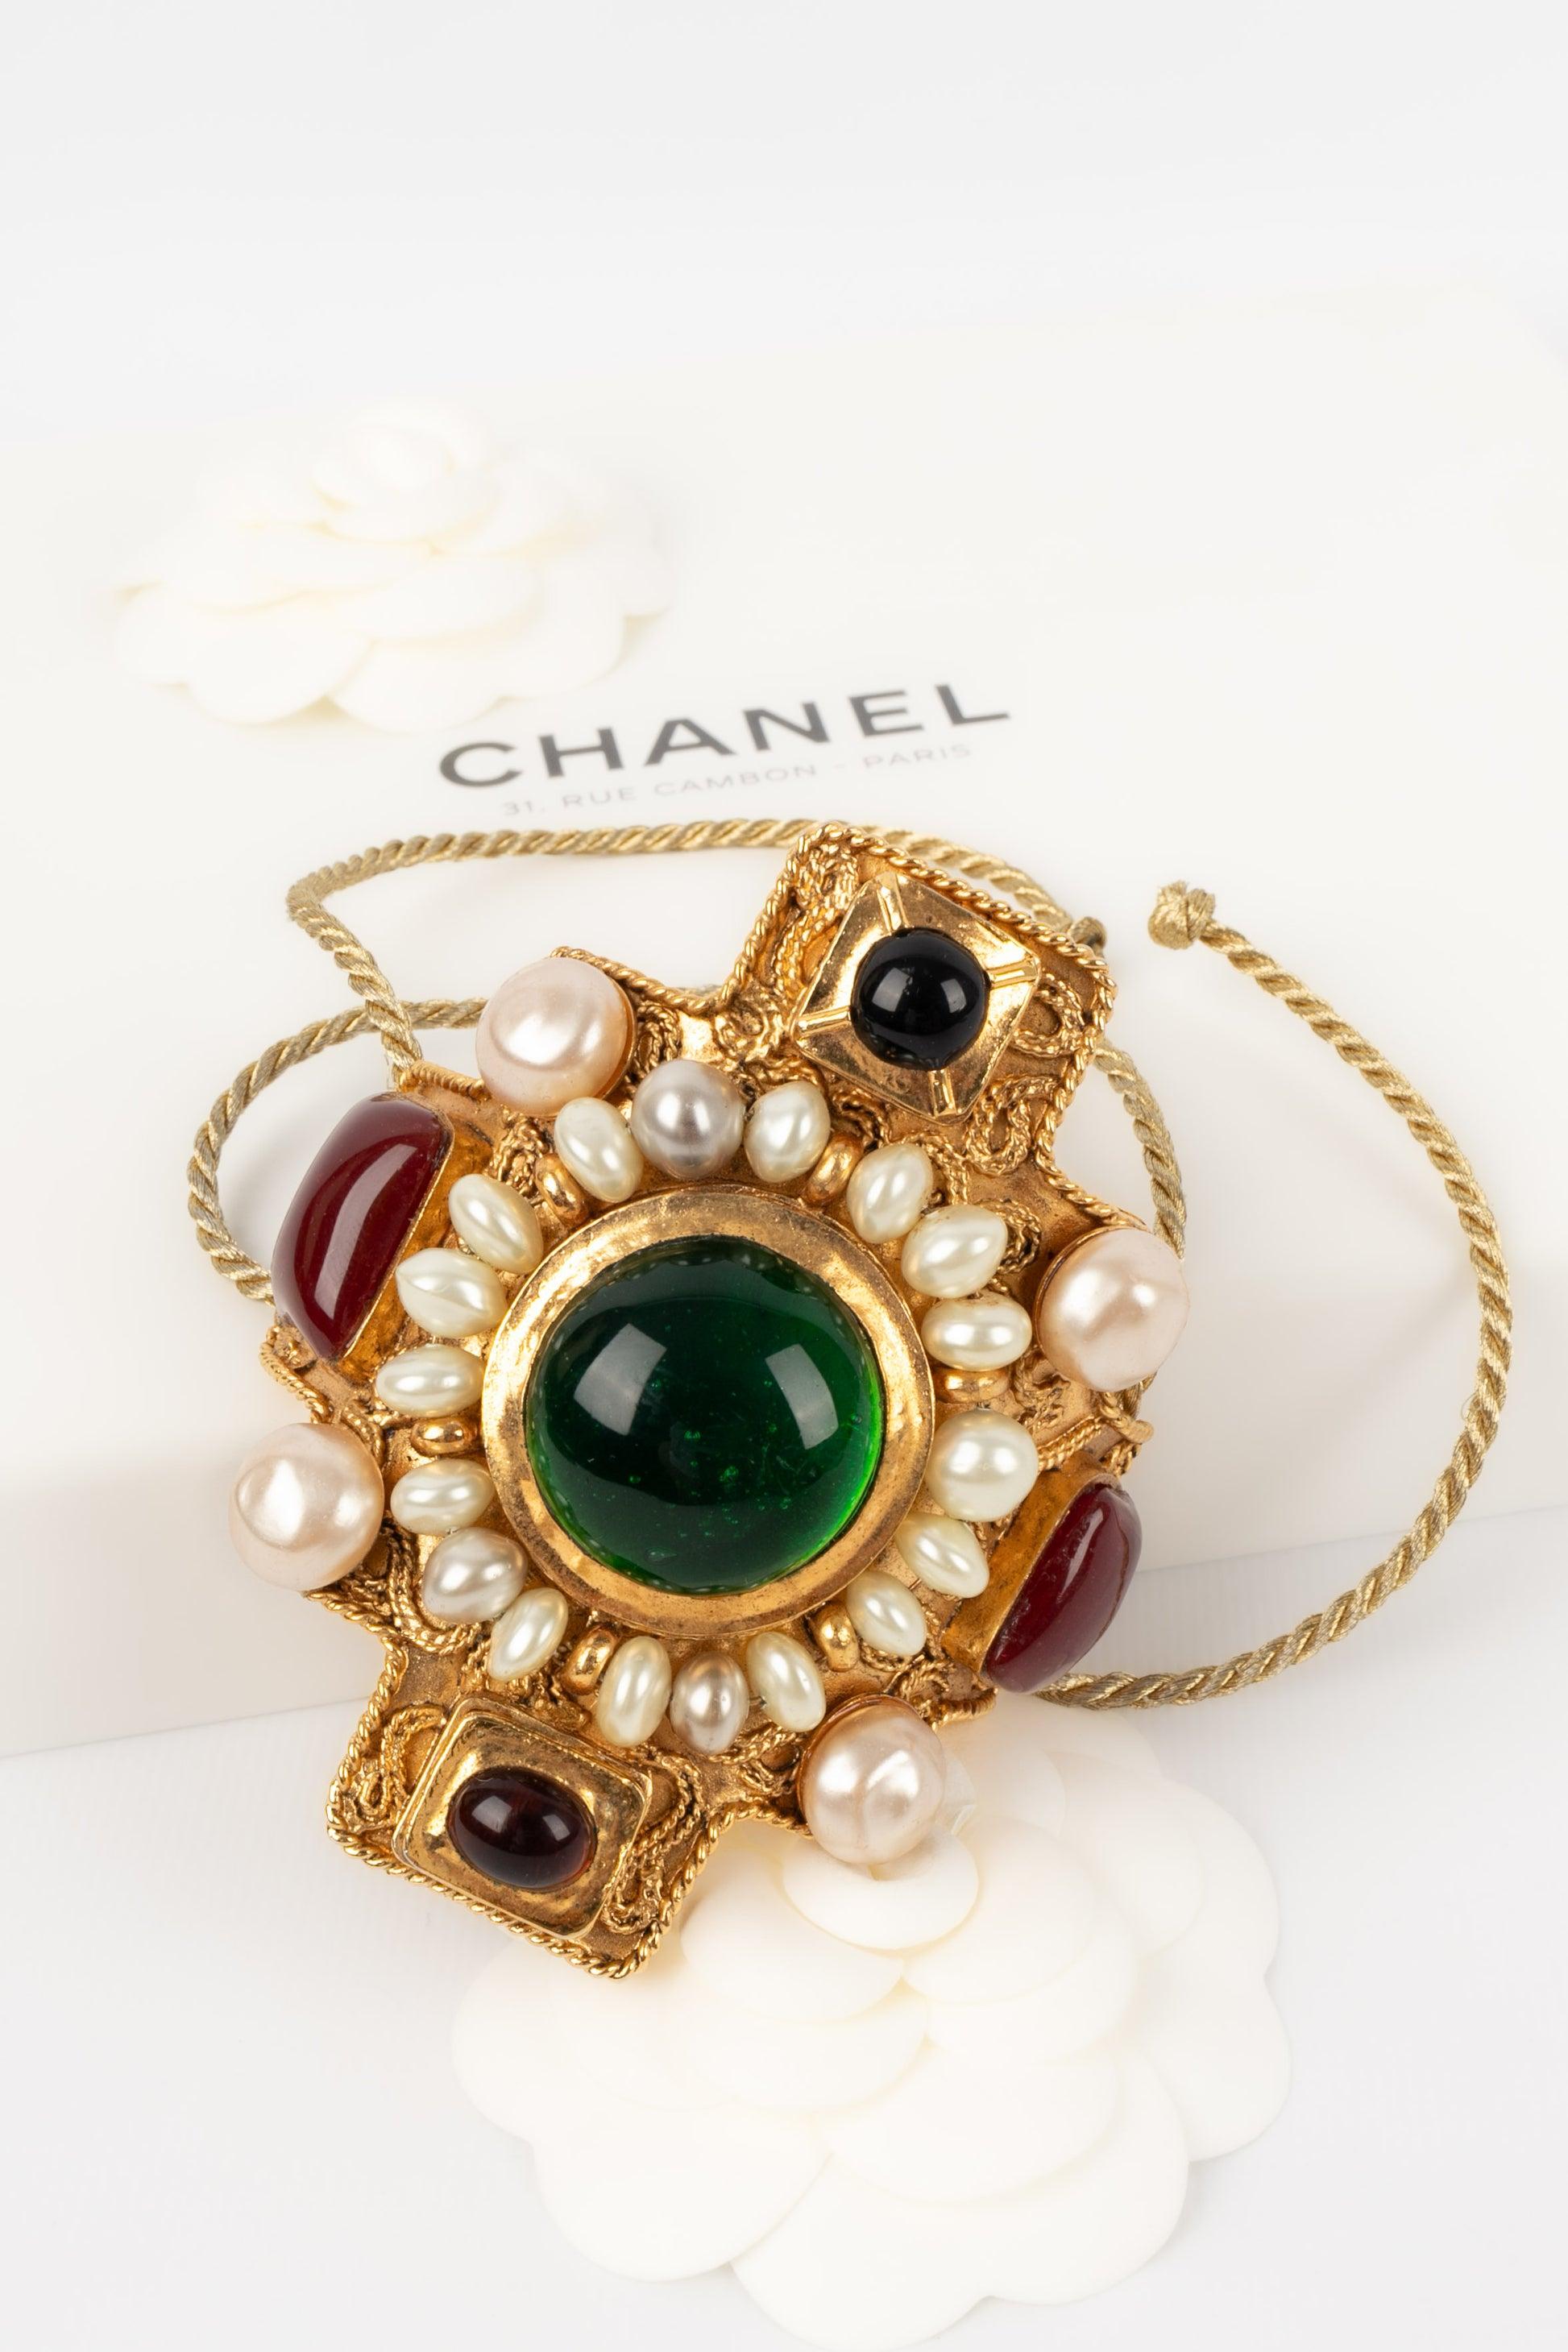 Chanel Arm Bracelet in Golden Metal, 1990/1991 8